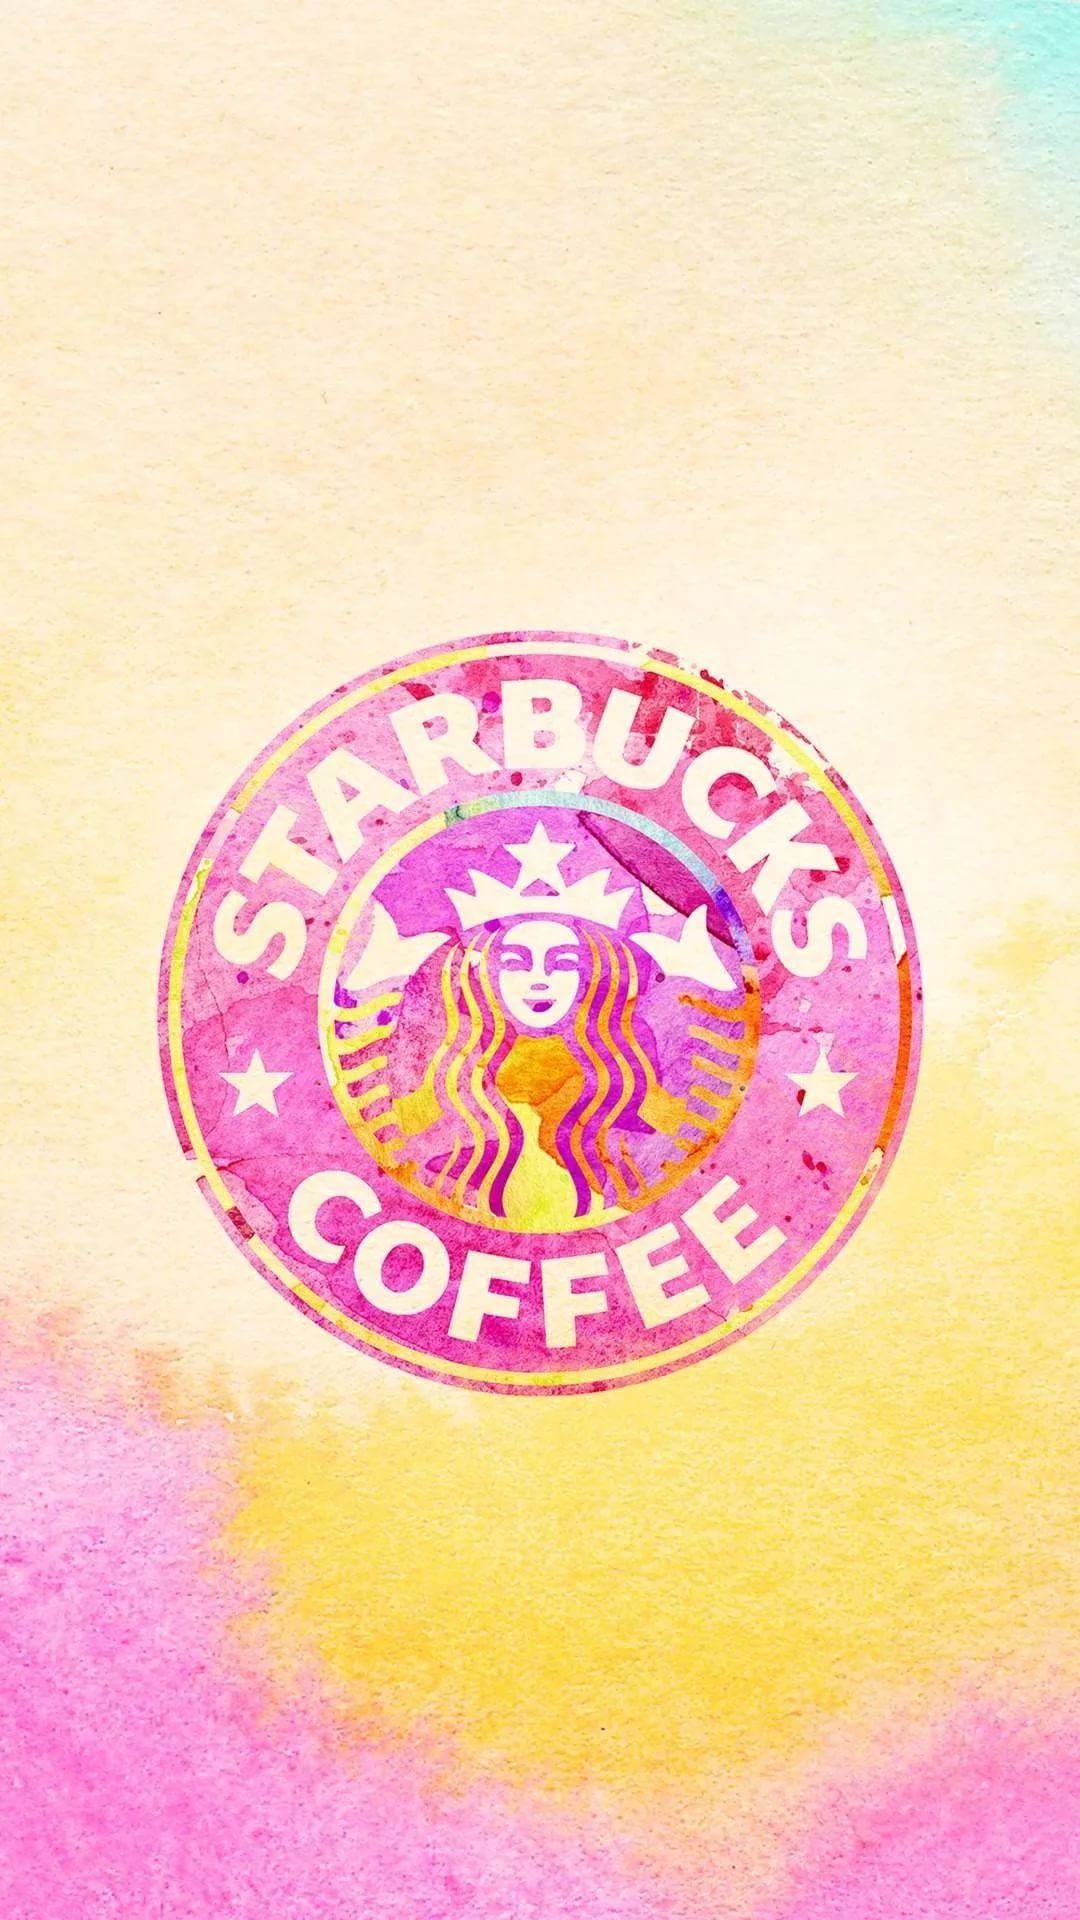 Starbucks iPhone Wallpaper: Image